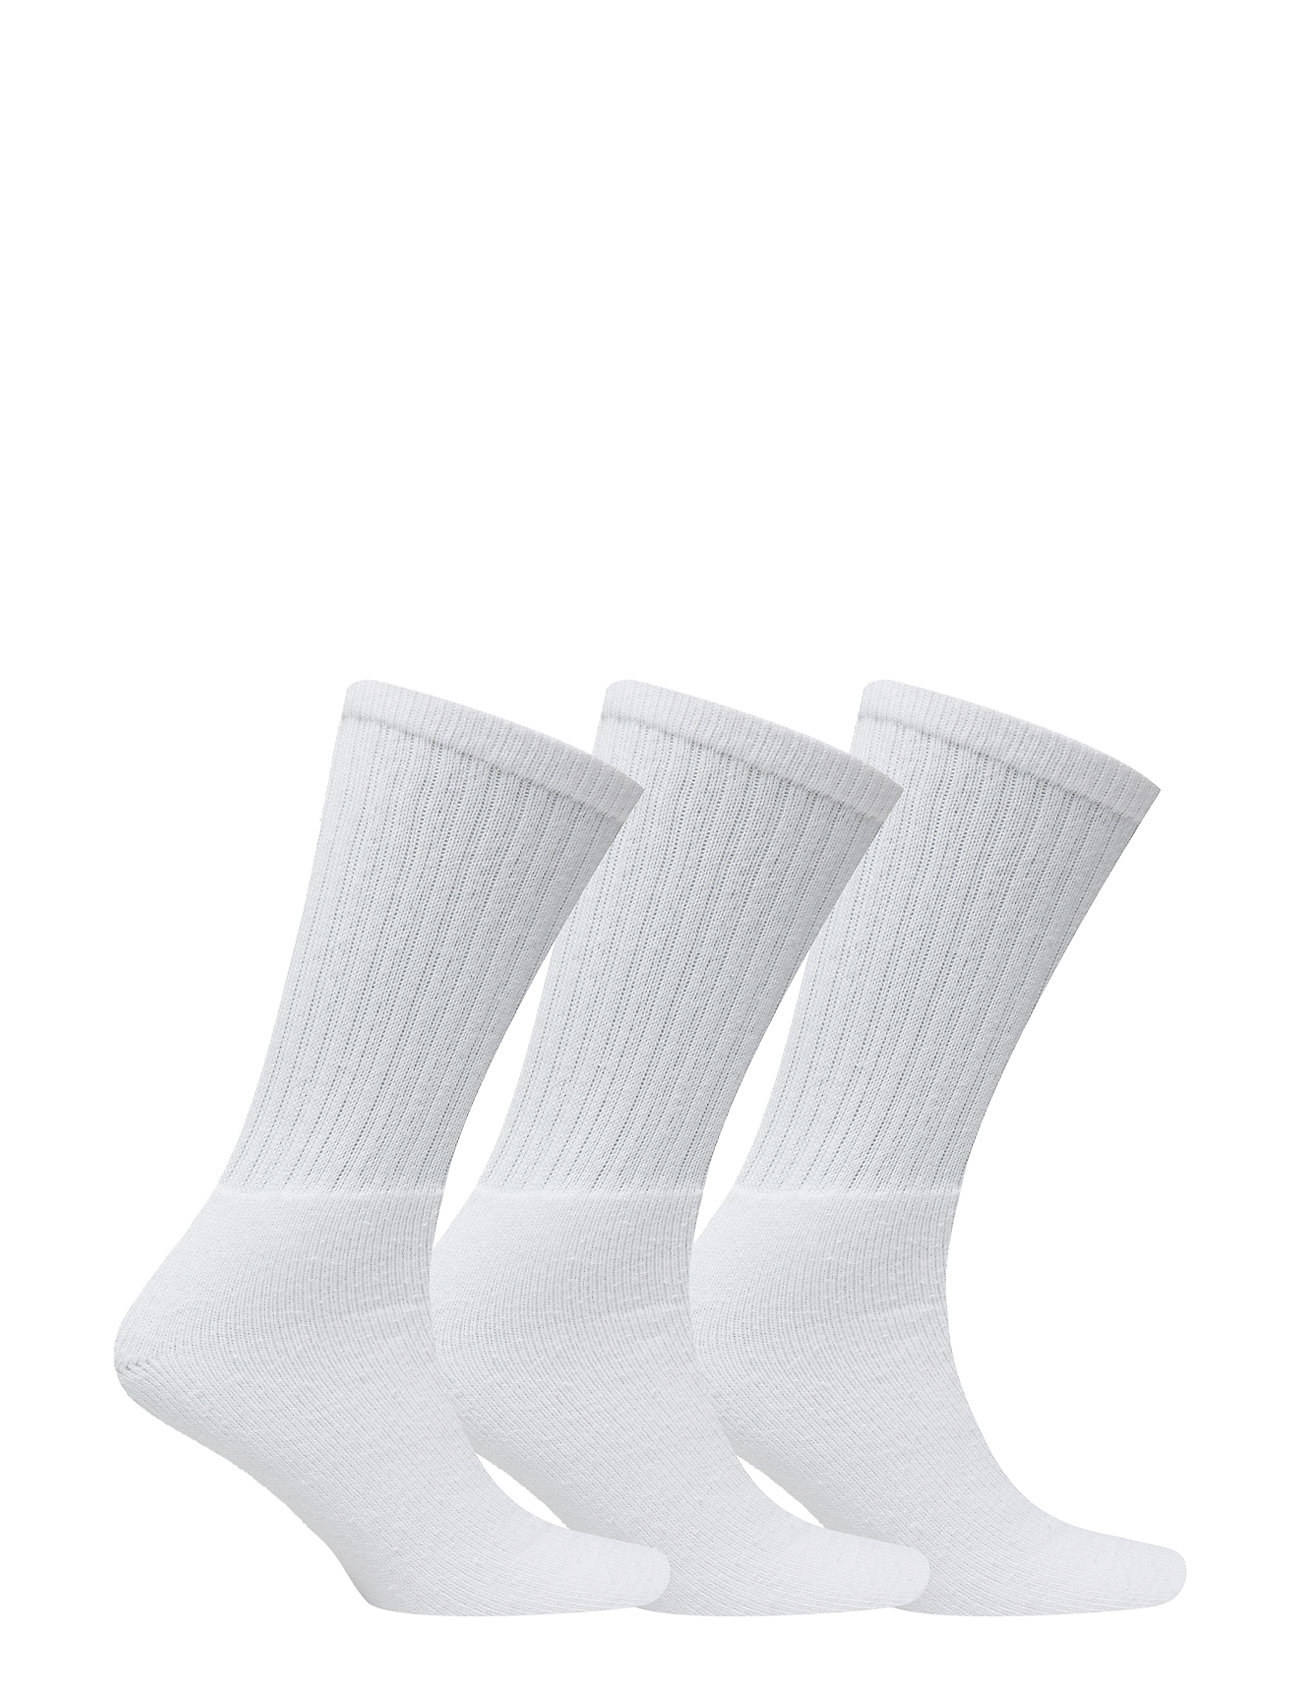 Claudio - Terry Socks 3 pack - multipack socks - white - 1